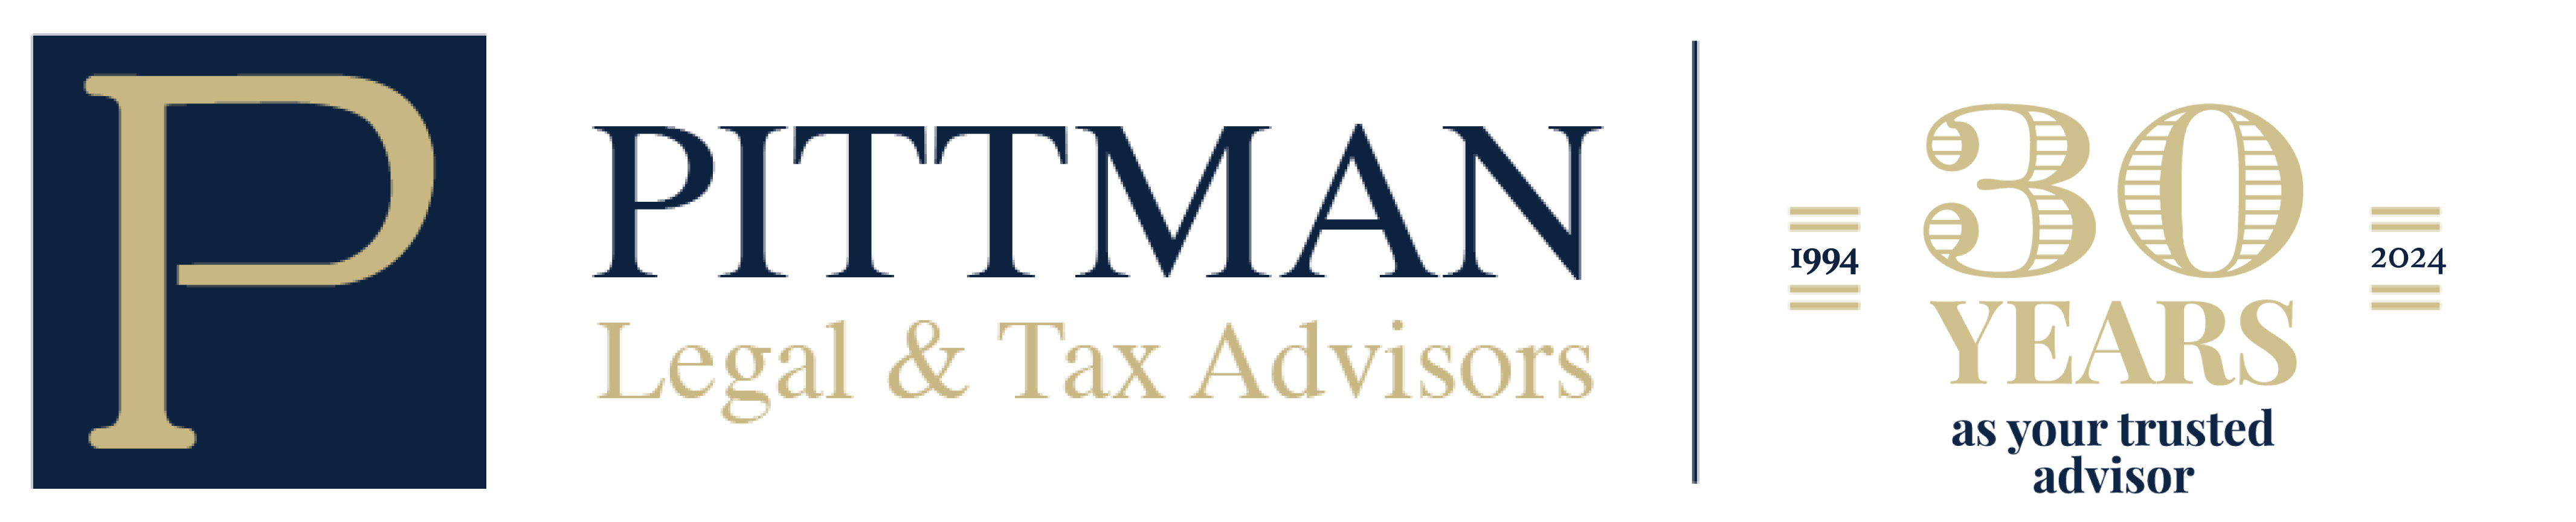 Pittman Legal & Tax Advisors